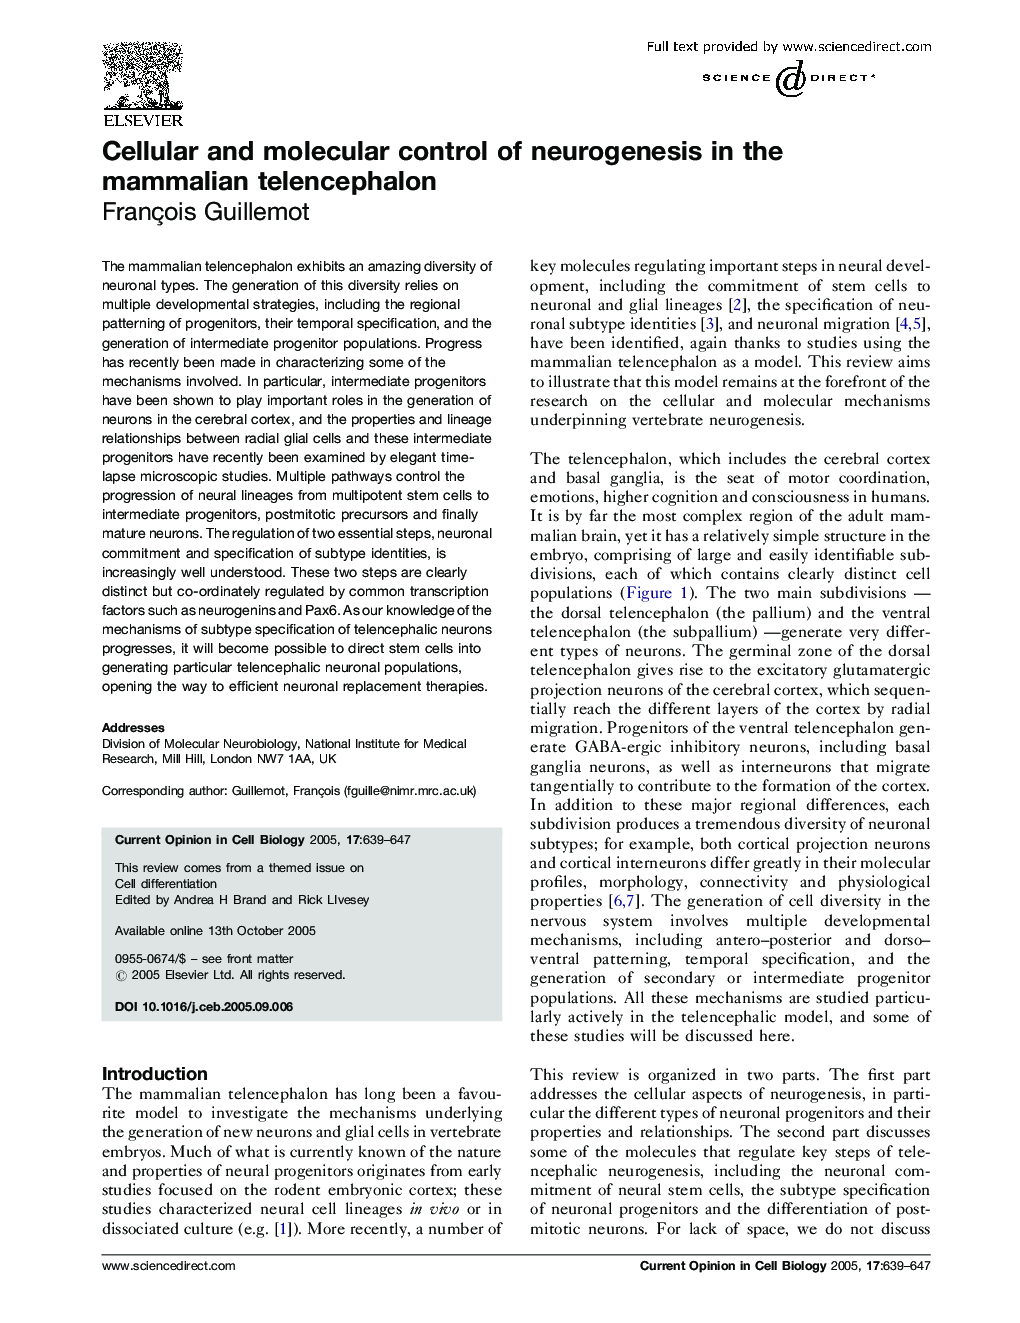 Cellular and molecular control of neurogenesis in the mammalian telencephalon